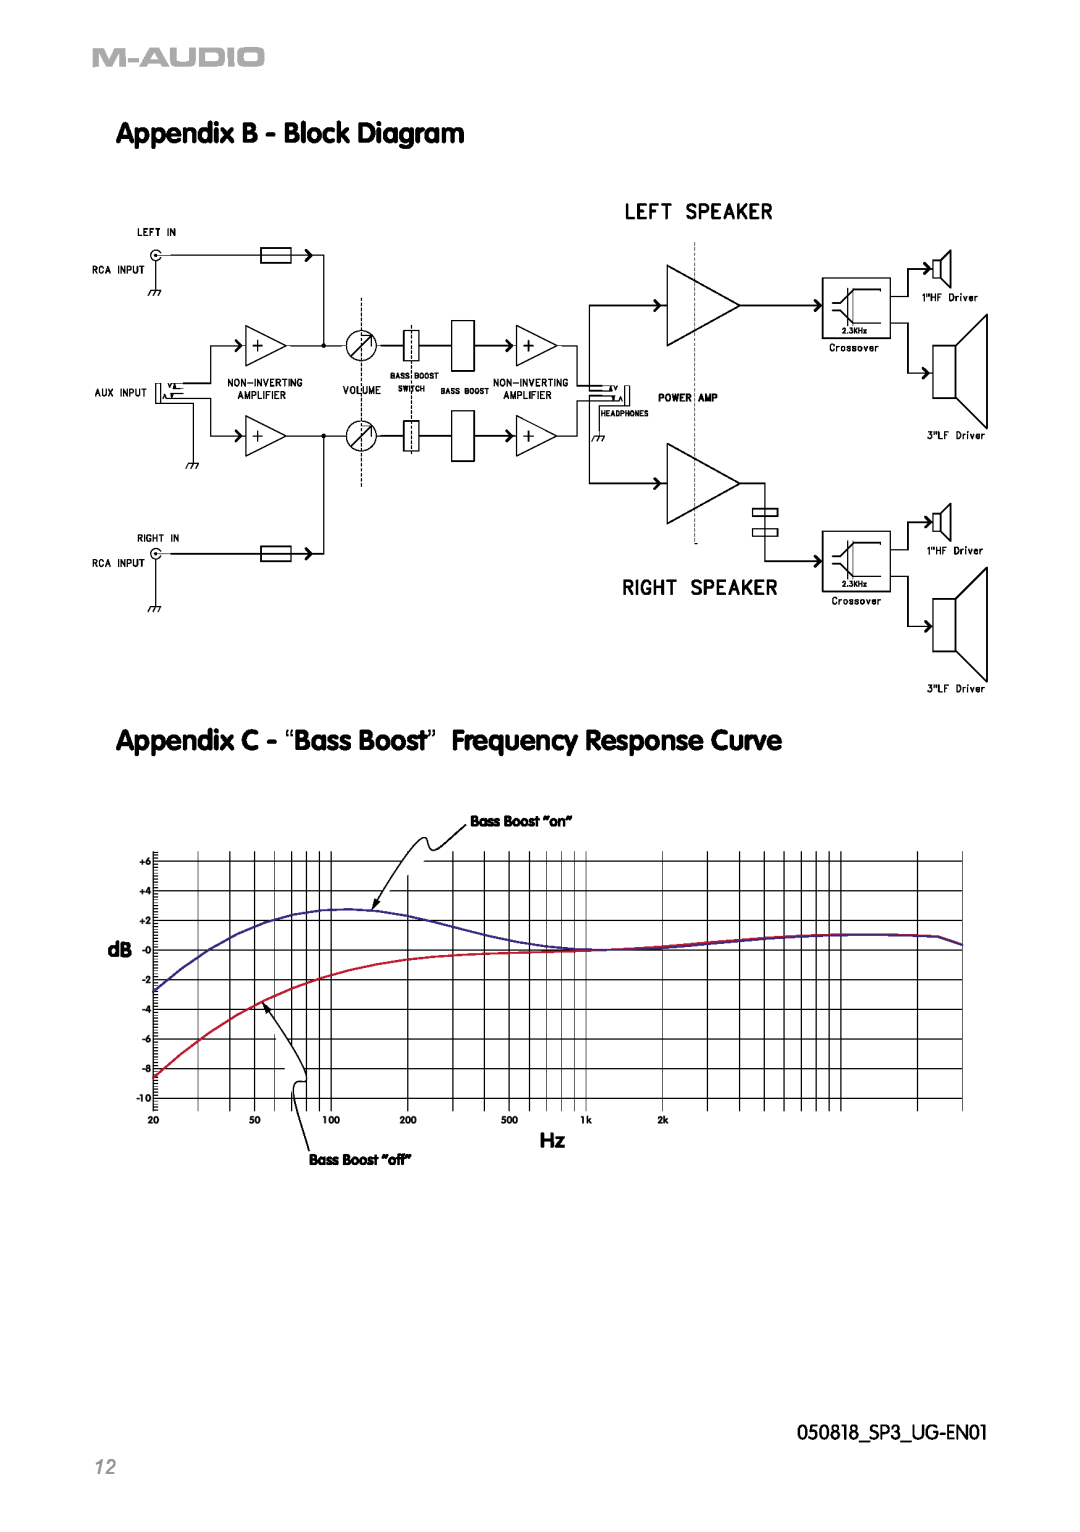 M-Audio manual Appendix B - Block Diagram, 050818 SP3 UG-EN01 